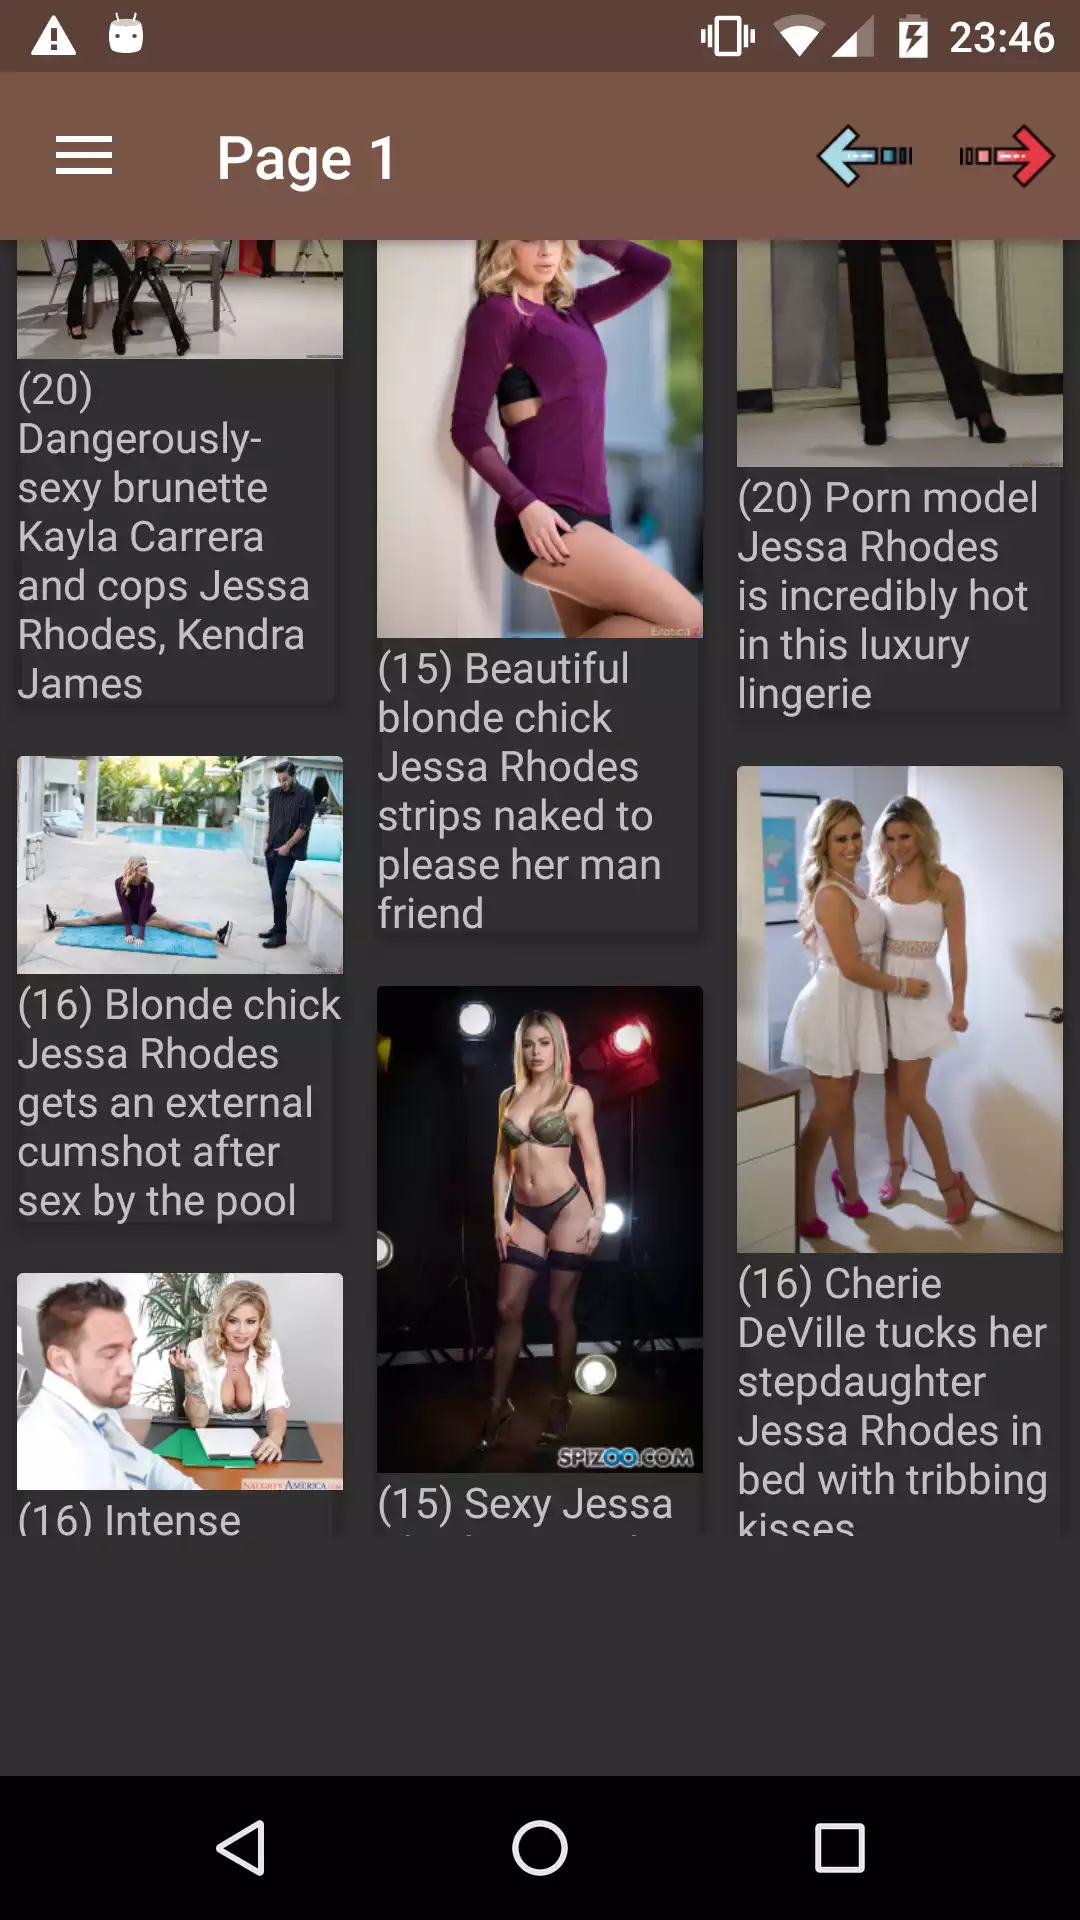 Jessa Rhodes best,pornstars,download,anime,for,images,galleries,gomez,hot,pornstar,wallpaper,henti,art,pictures,apps,porn,futanari,hentai,esperanza,panties,apk,watching,sexy,picture,pics